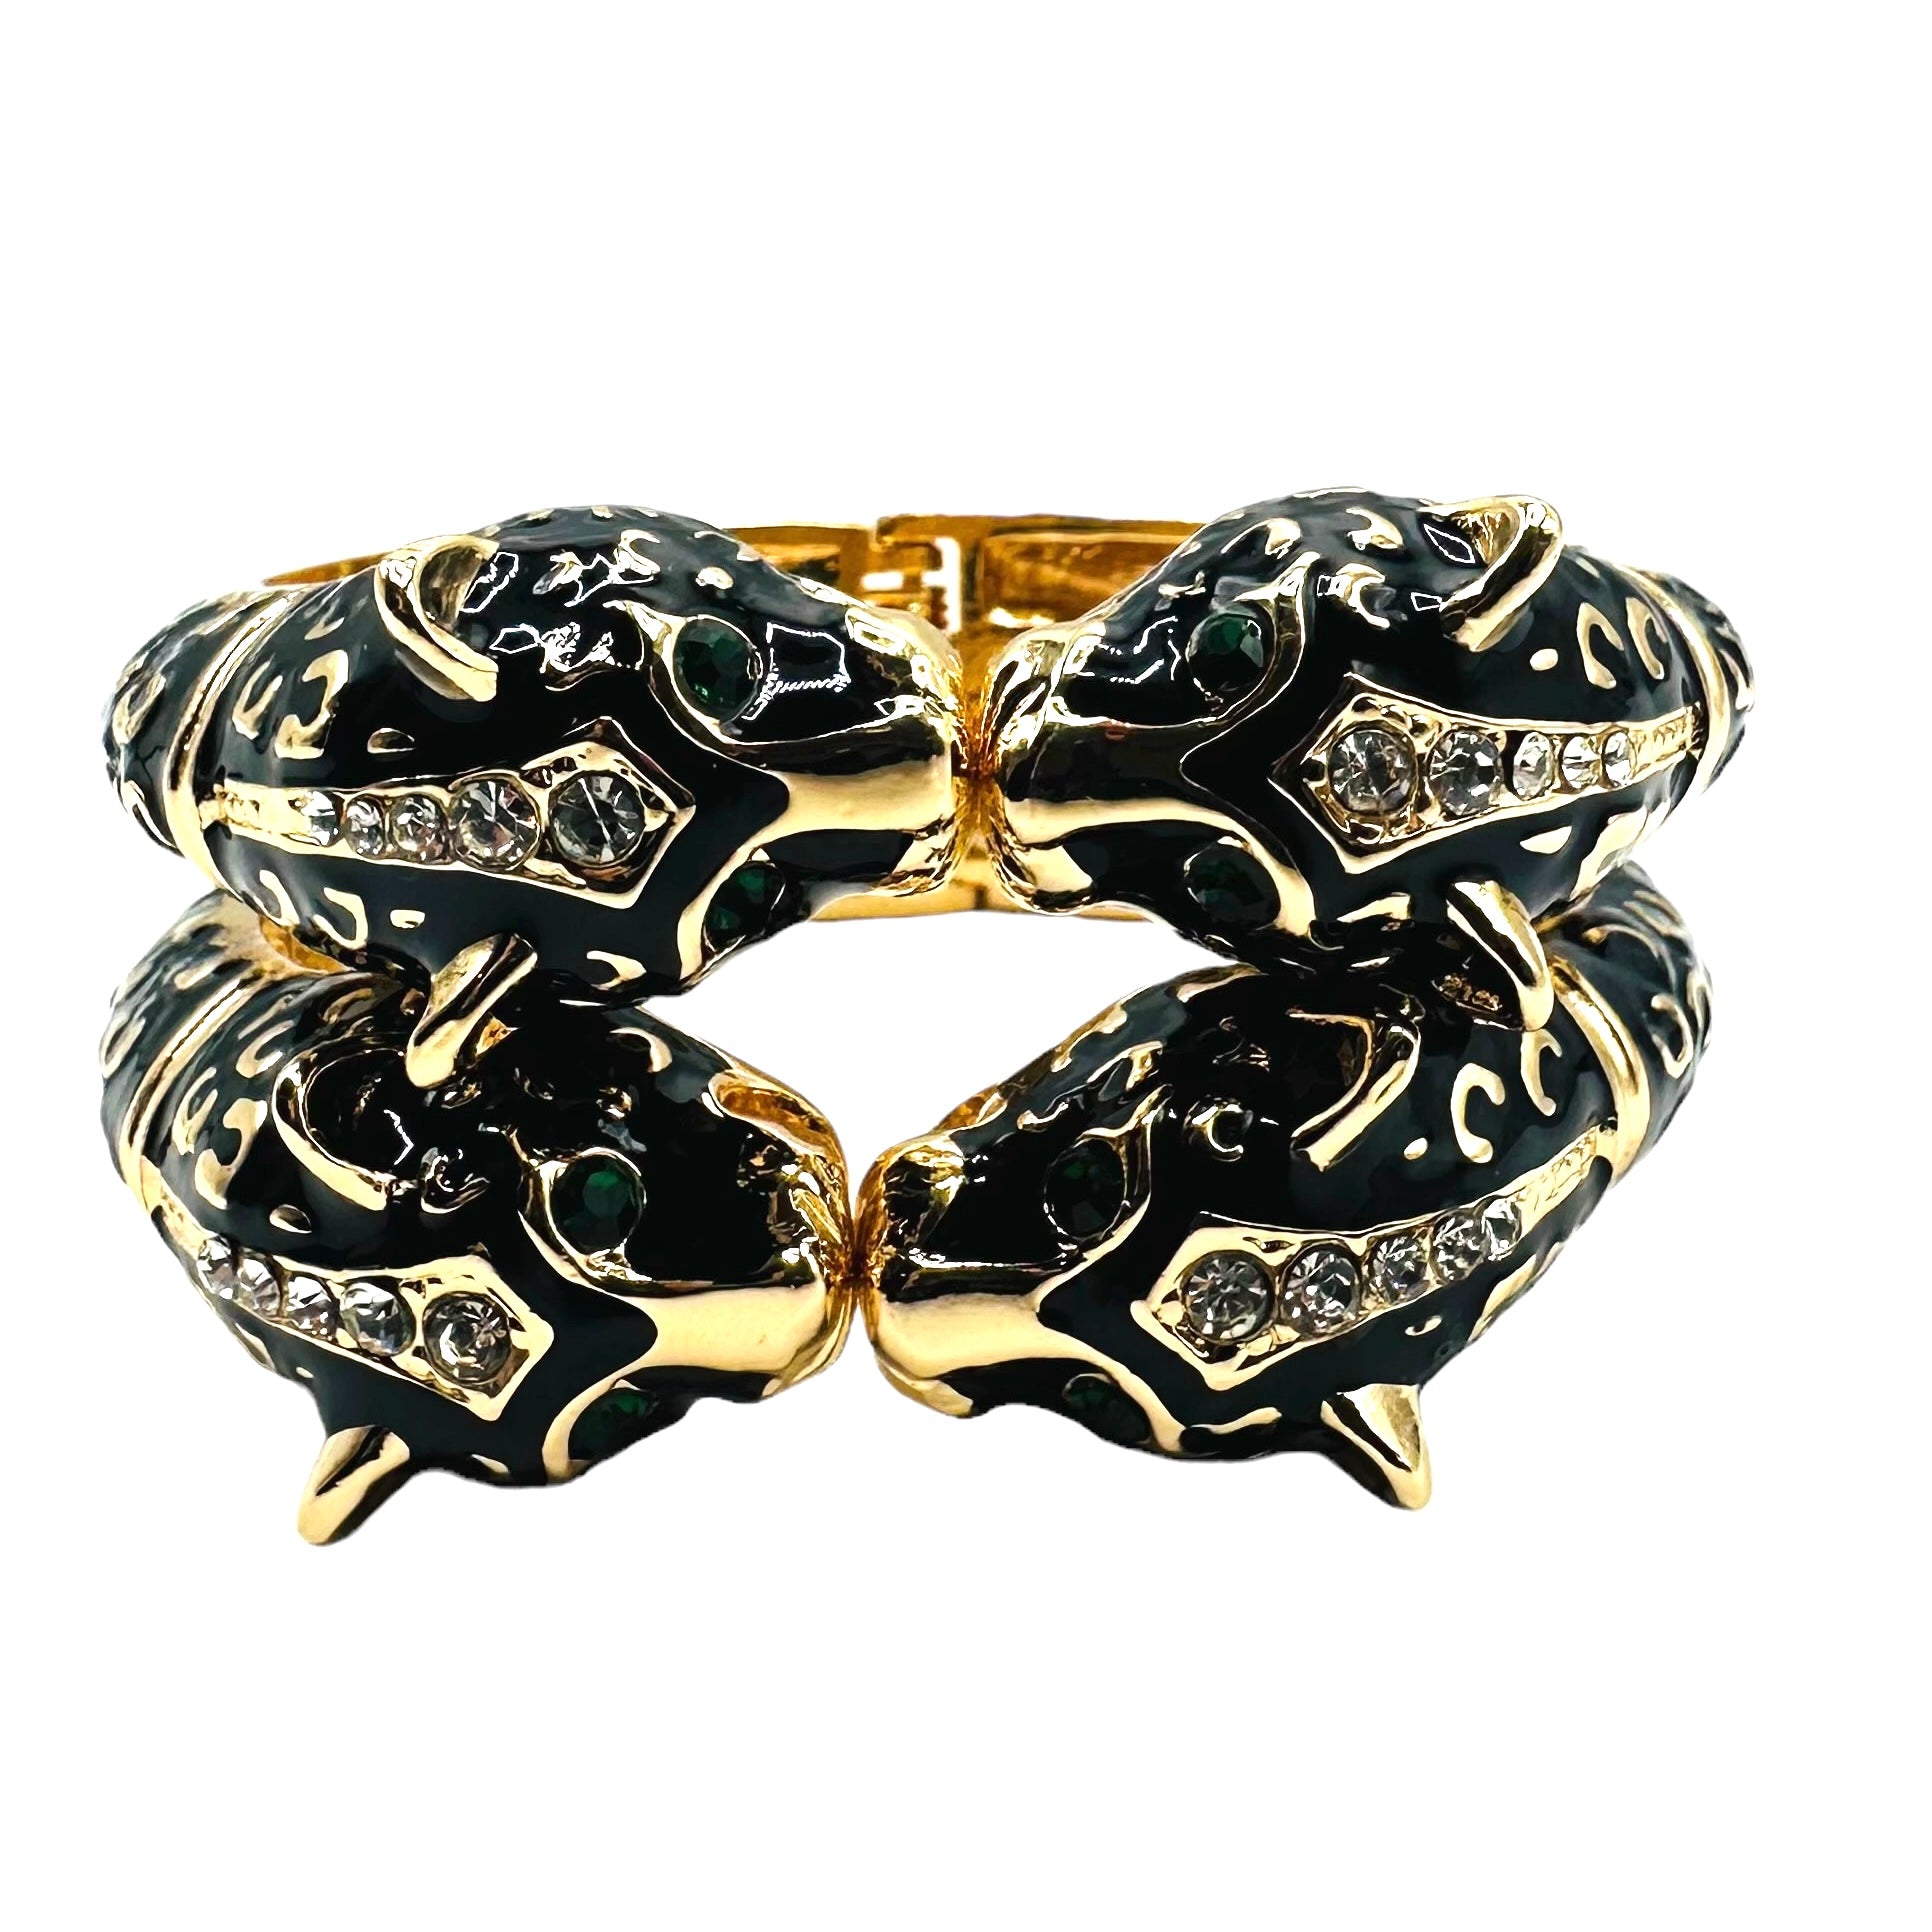 Leopard Bracelet in Black/Gold